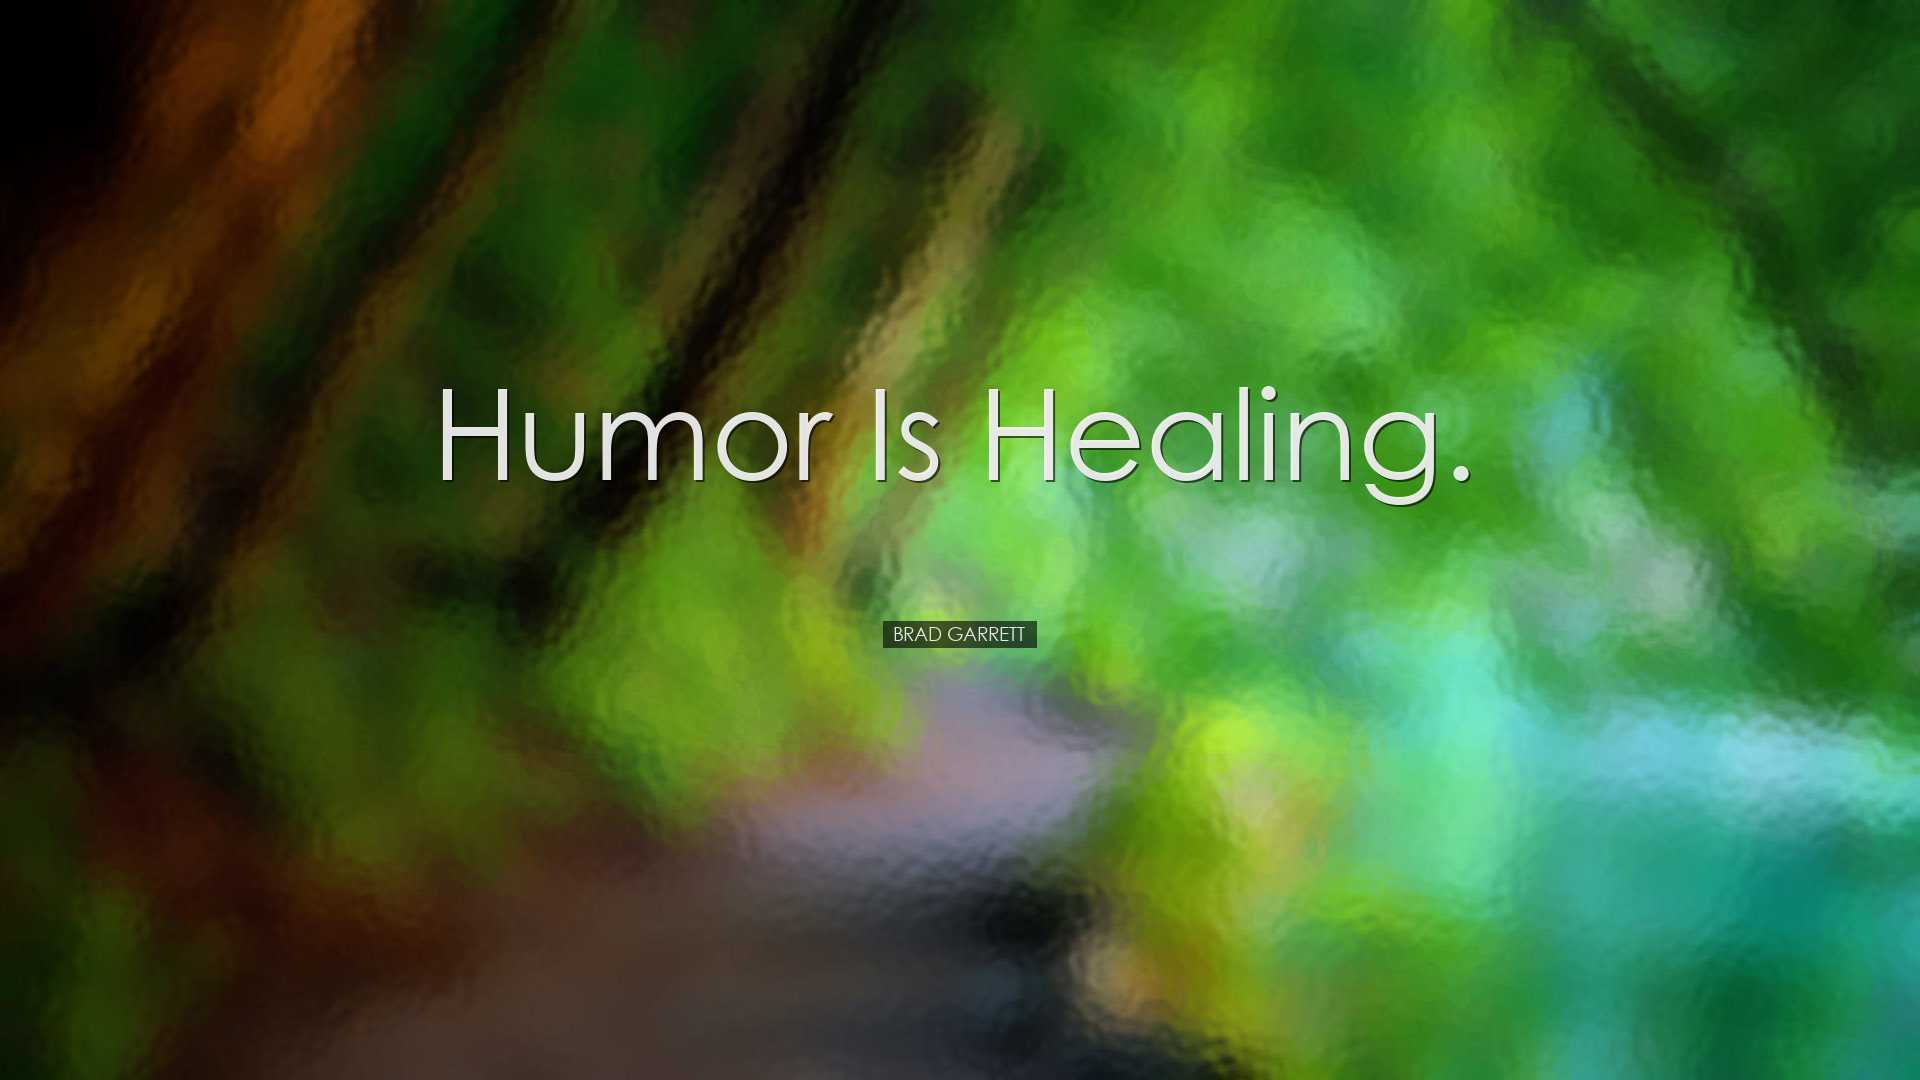 Humor is healing. - Brad Garrett